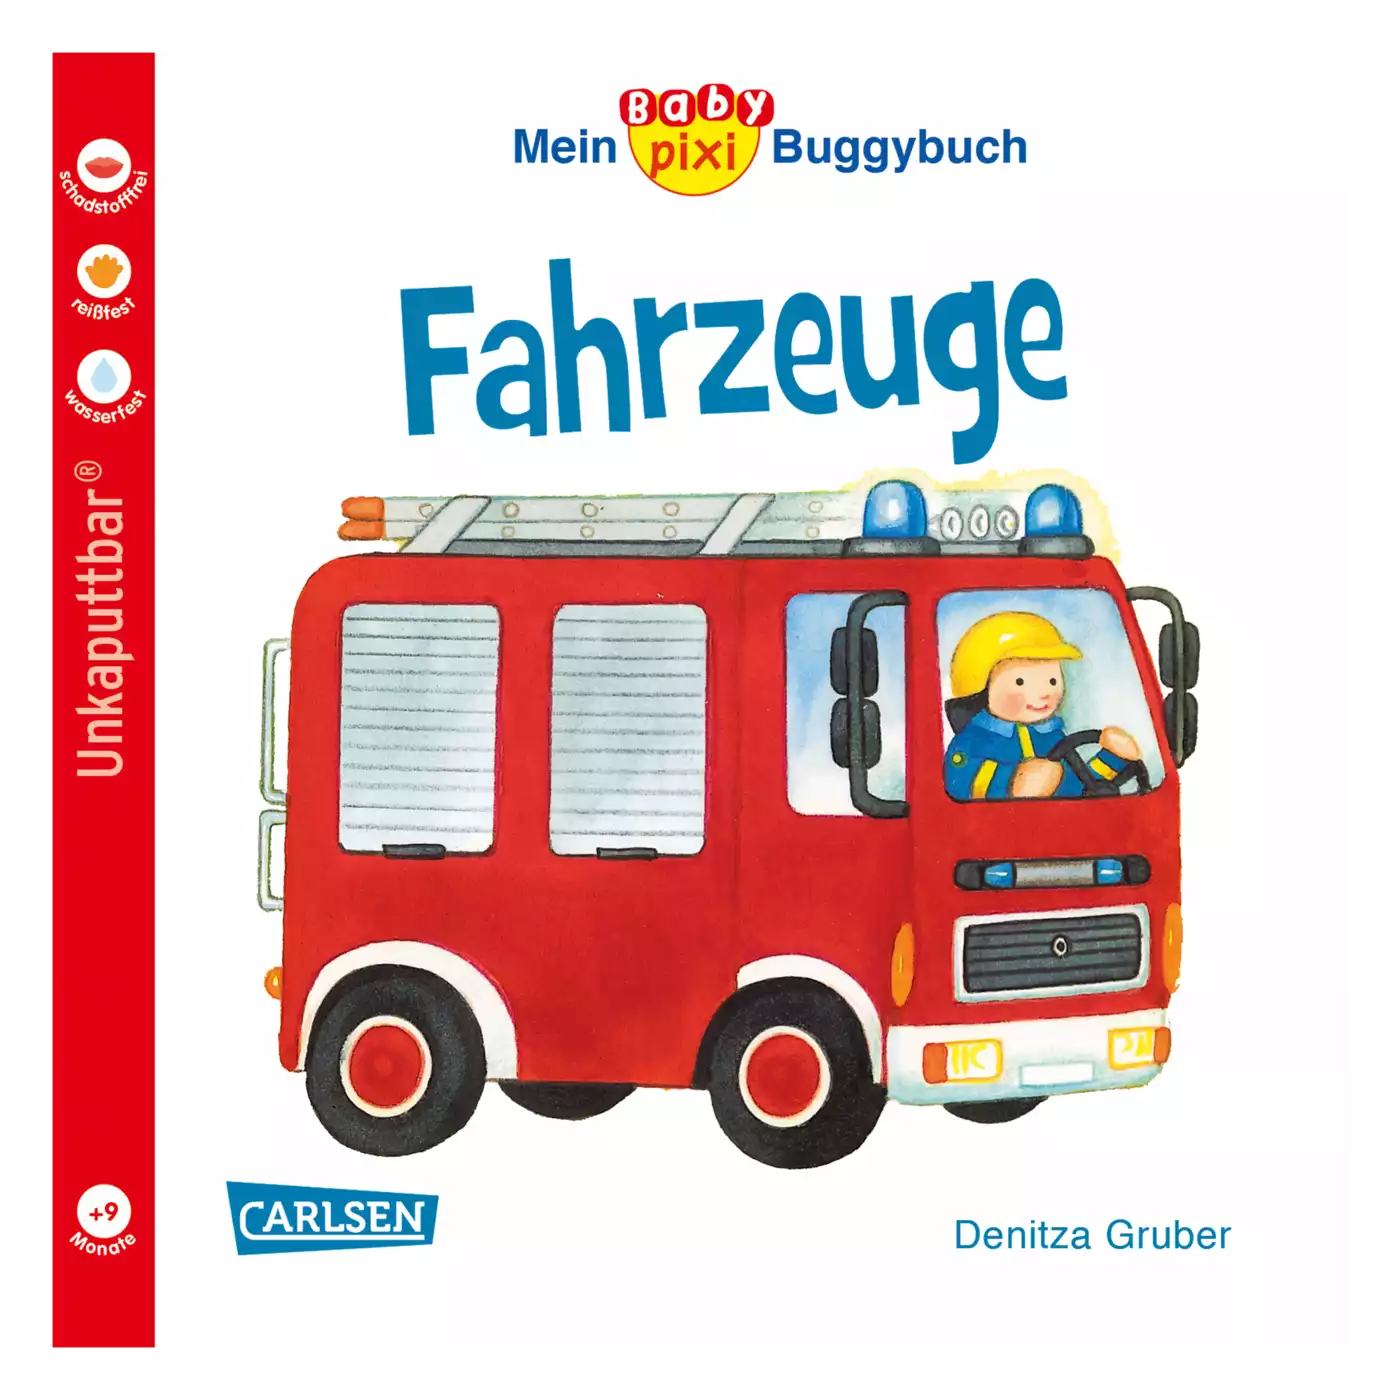 Baby Pixi Buggybuch: Fahrzeuge CARLSEN 2000571212589 1